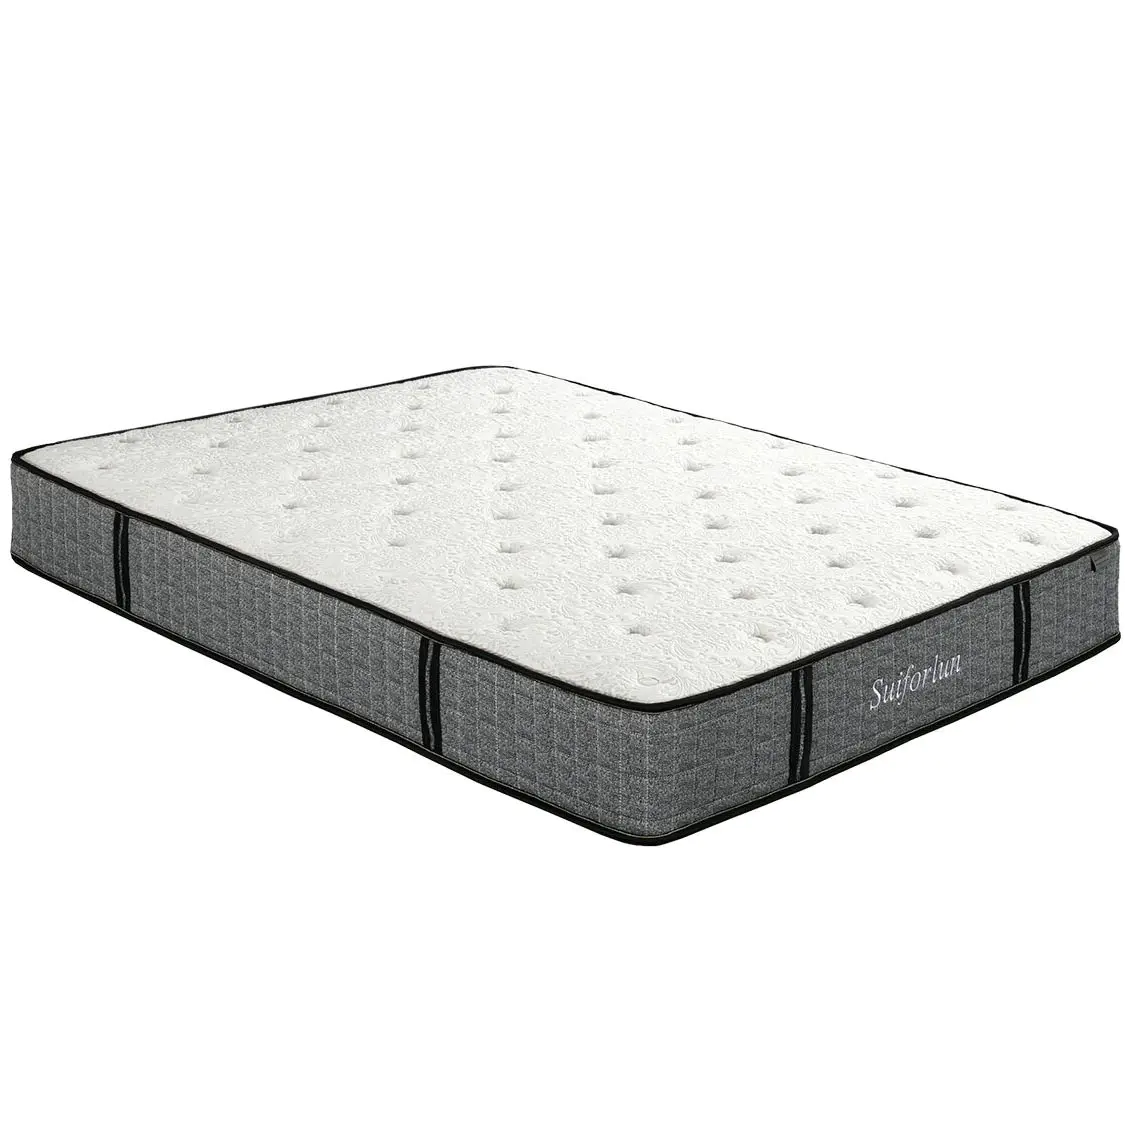 Suiforlun mattress inexpensive hybrid mattress king supplier